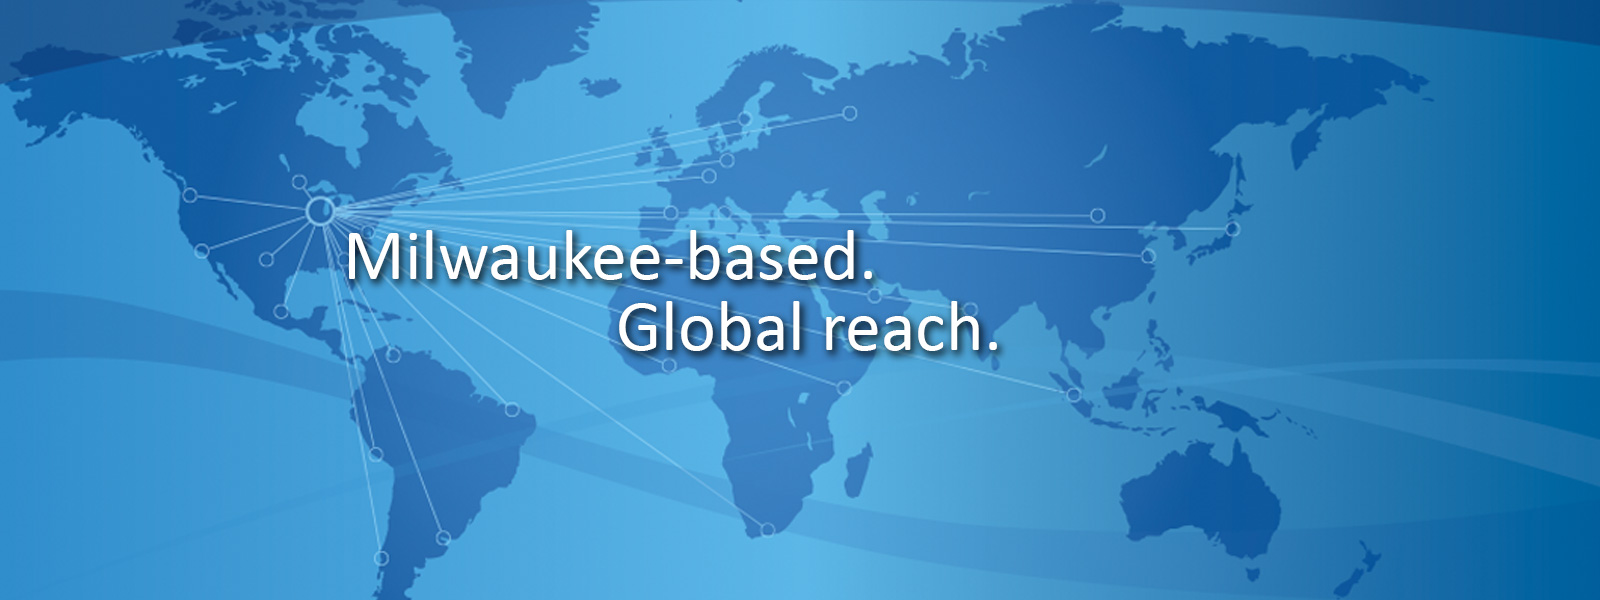 Milwaukee based. Global reach.